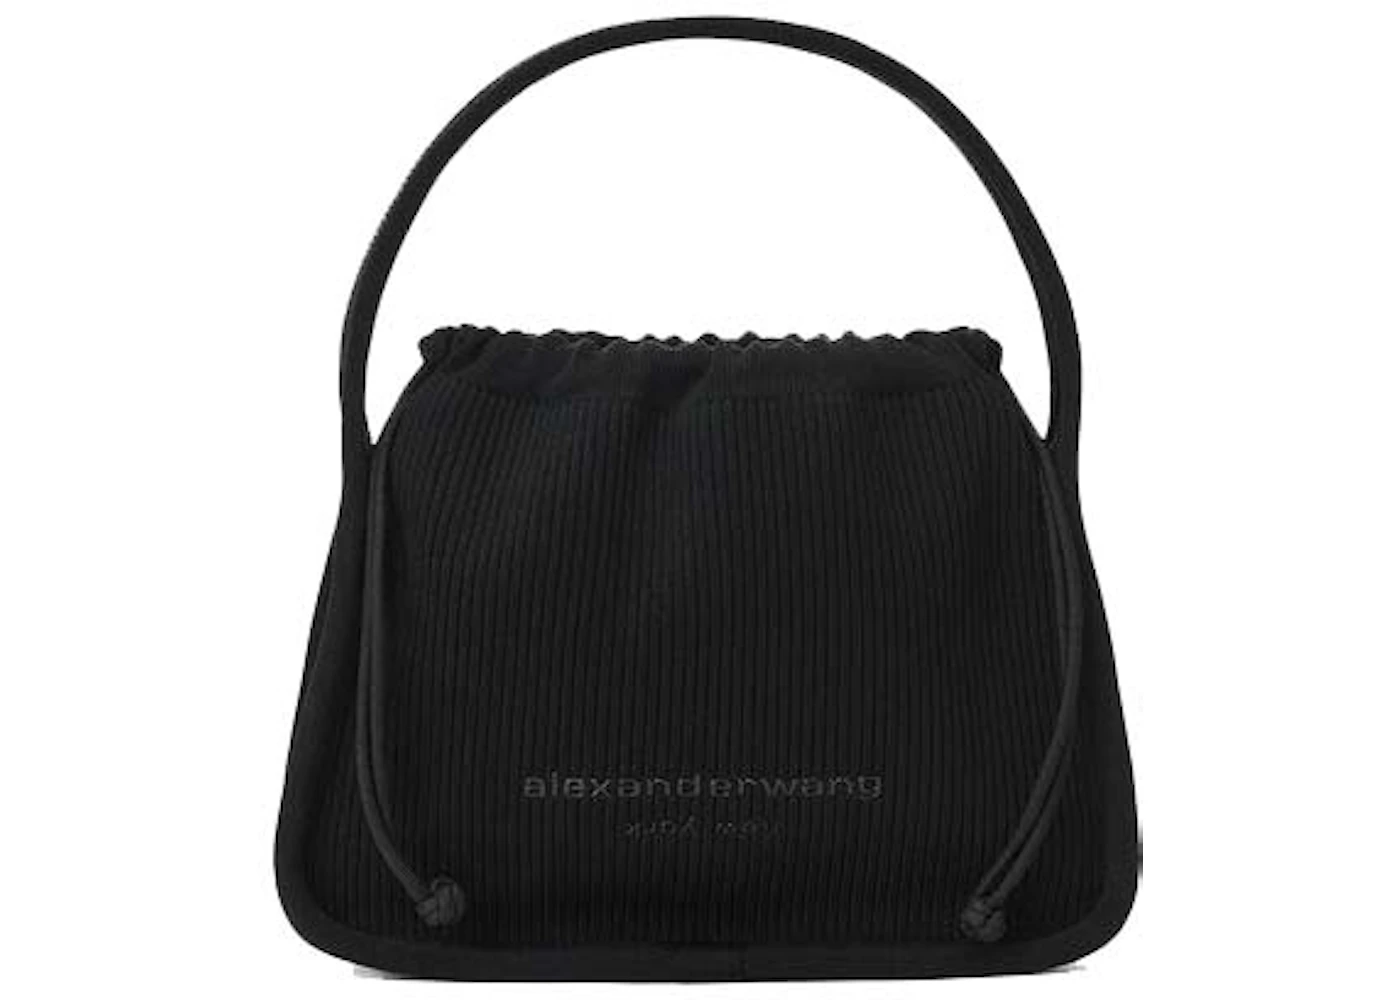 Alexander Wang Ryan Small Bag Black in Polyester/Nylon - US